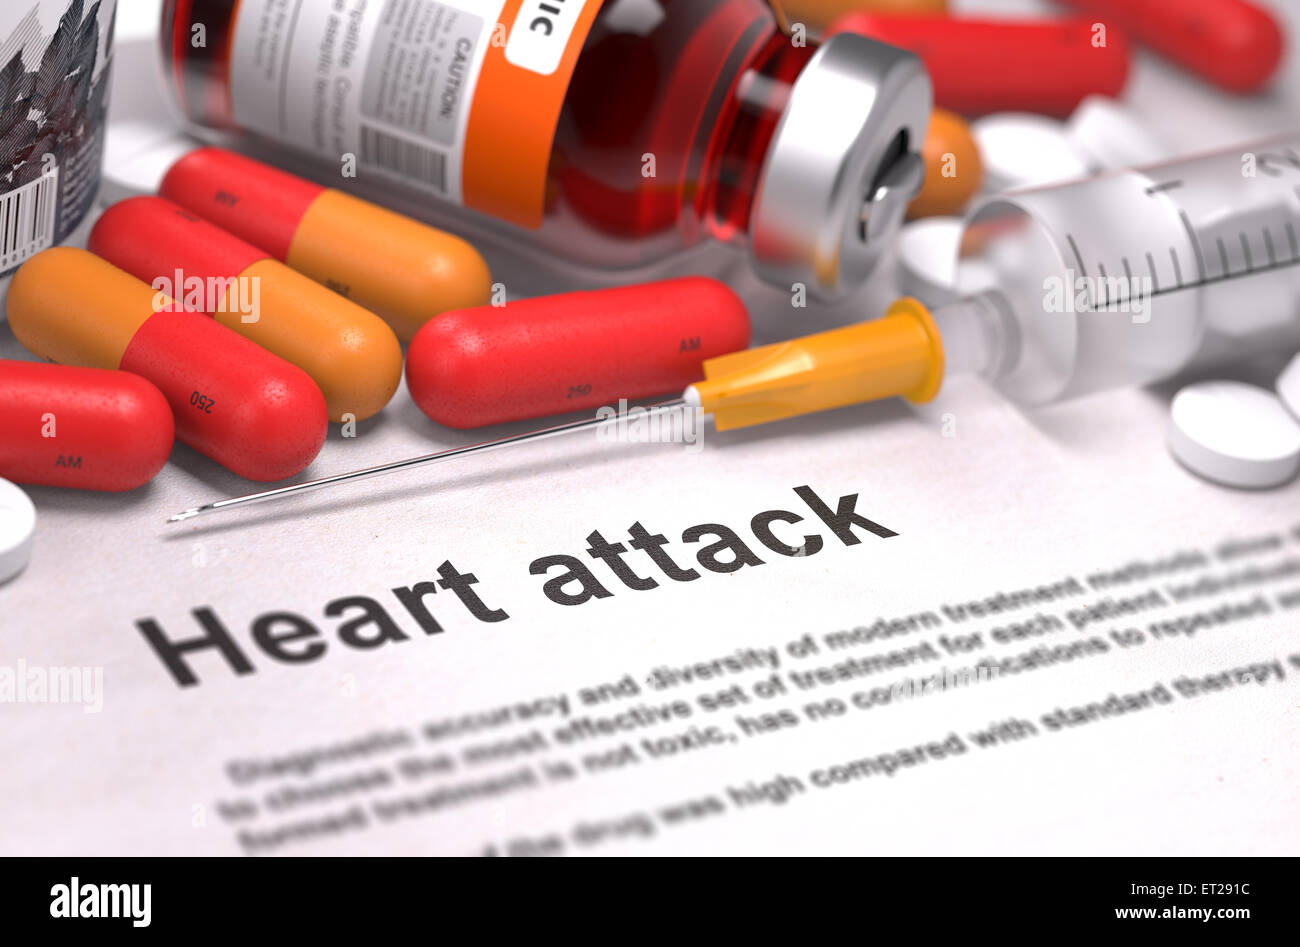 Diagnosis - Heart Attack. Medical Concept. 3D Render. Stock Photo